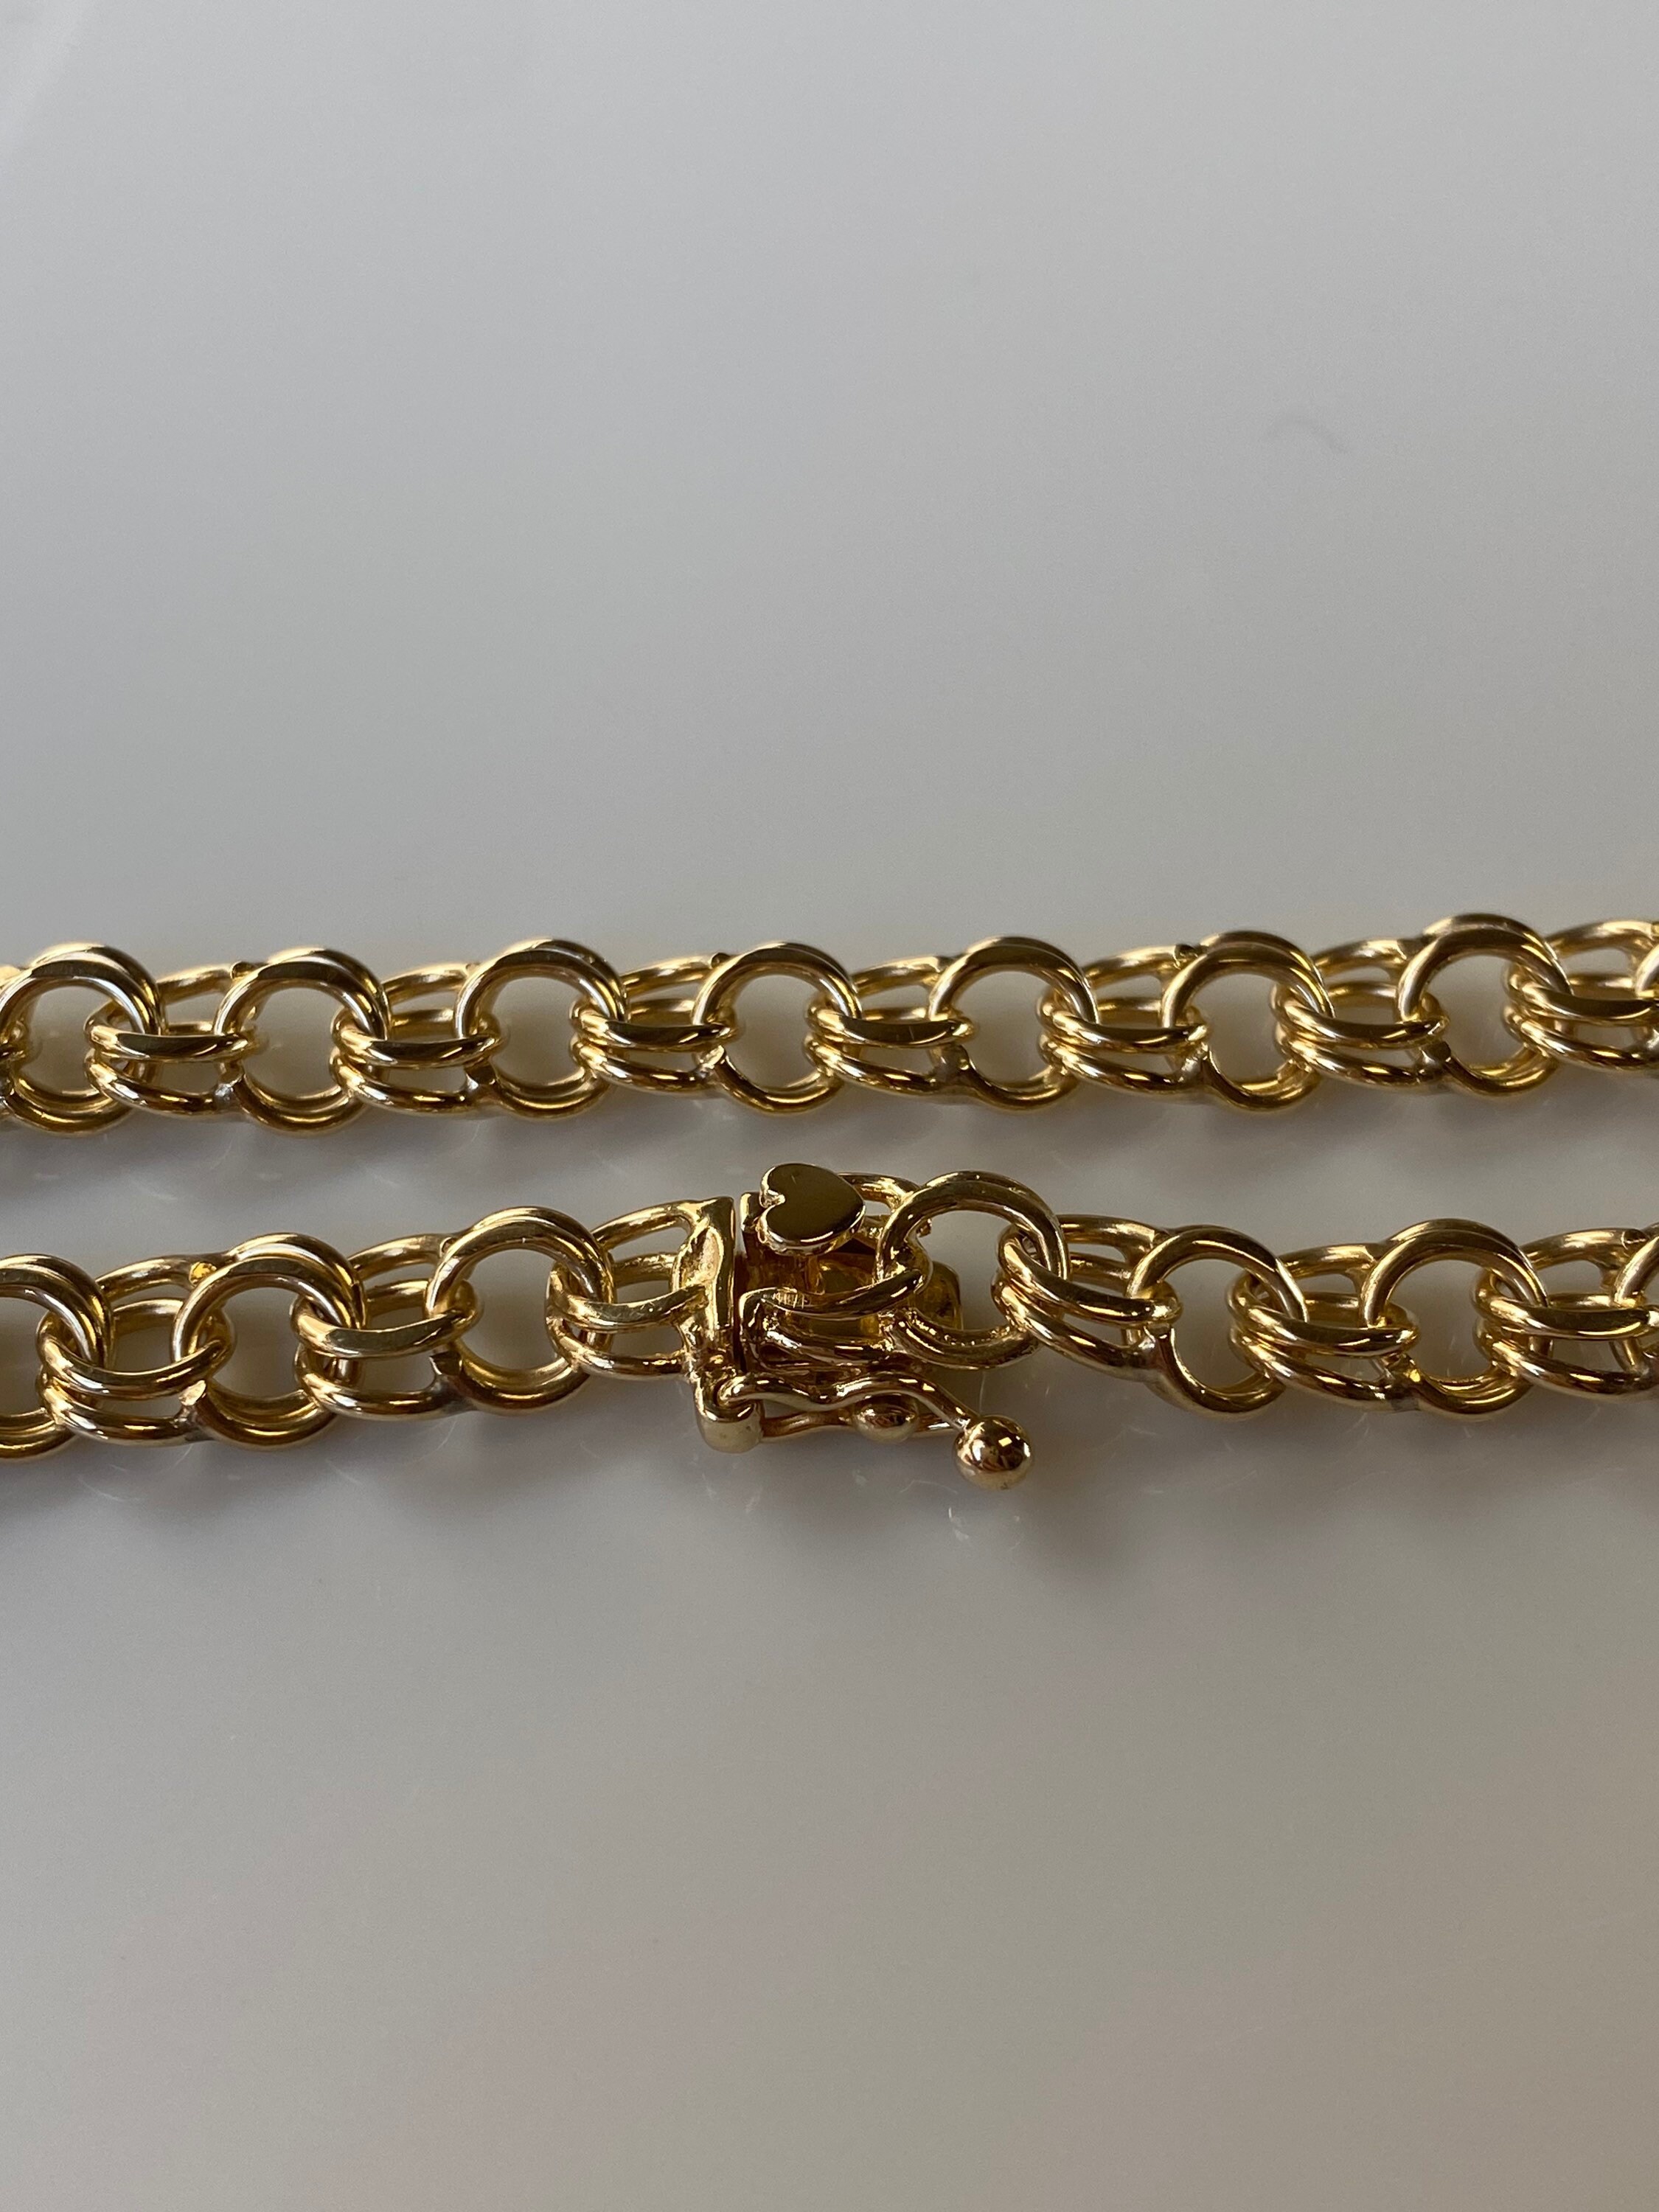 Vintage Solid 14k Yellow Gold Charm Bracelet Real Genuine 